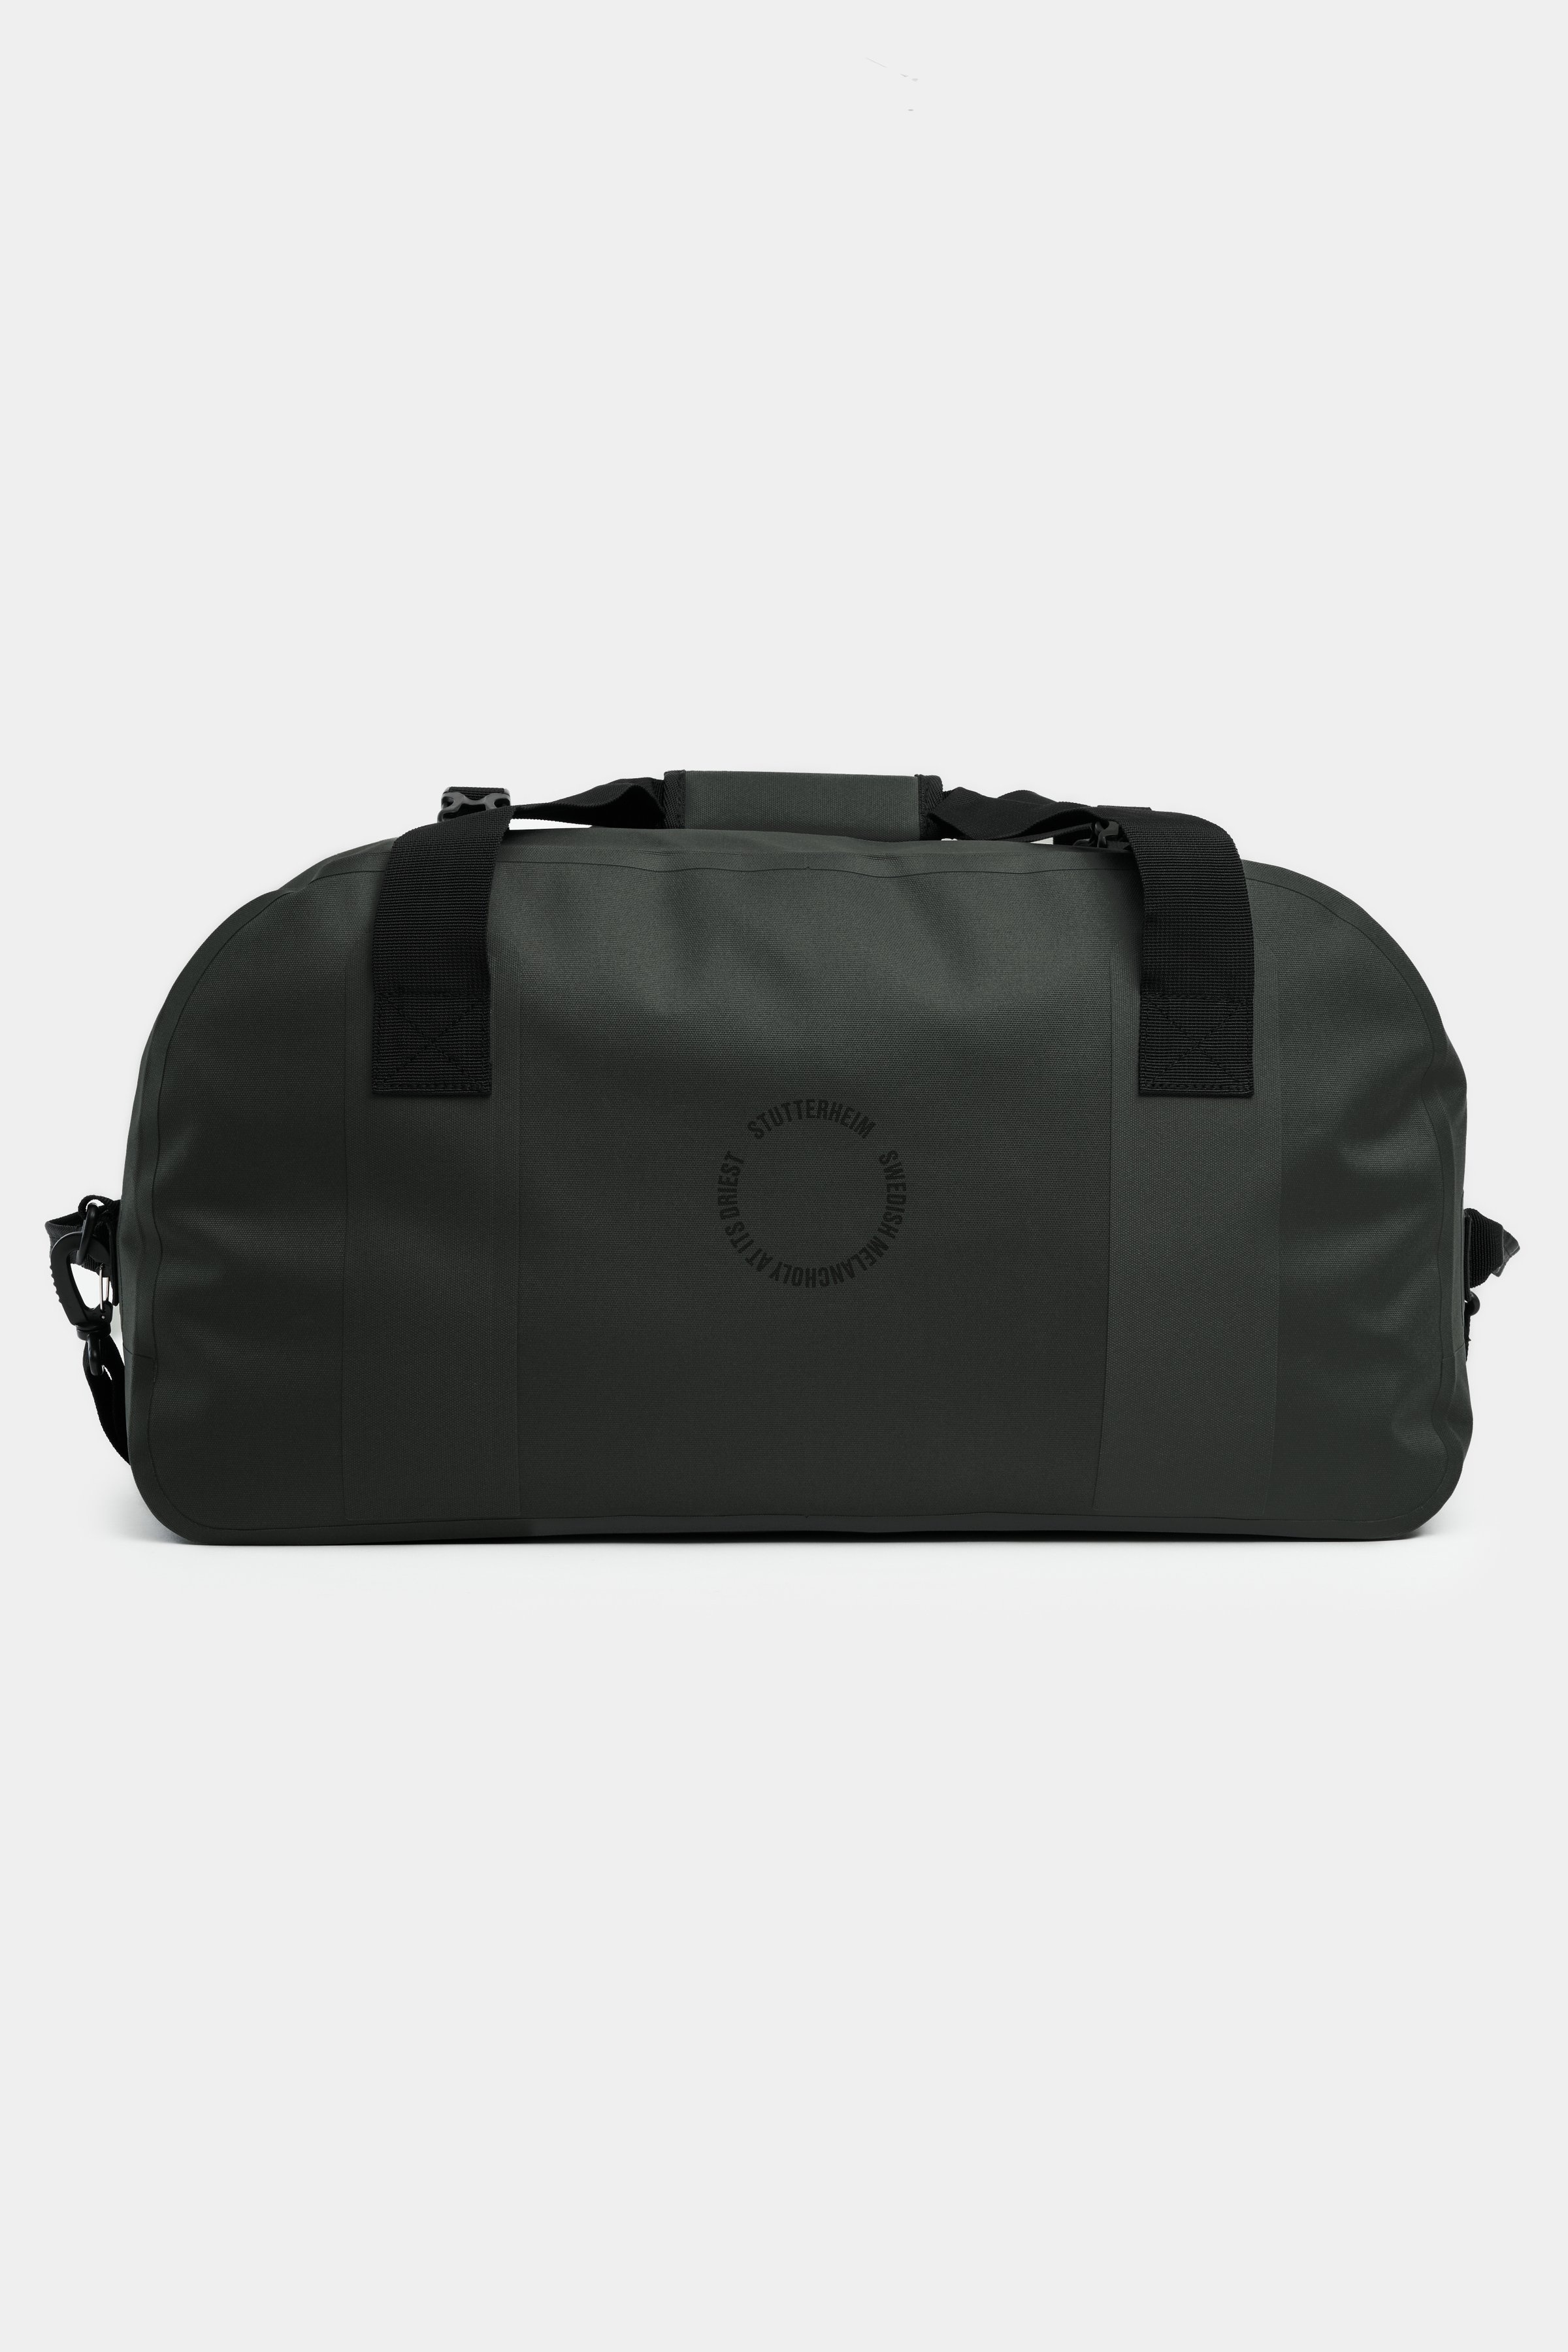 Rain Duffel Bag 50L Green - 3